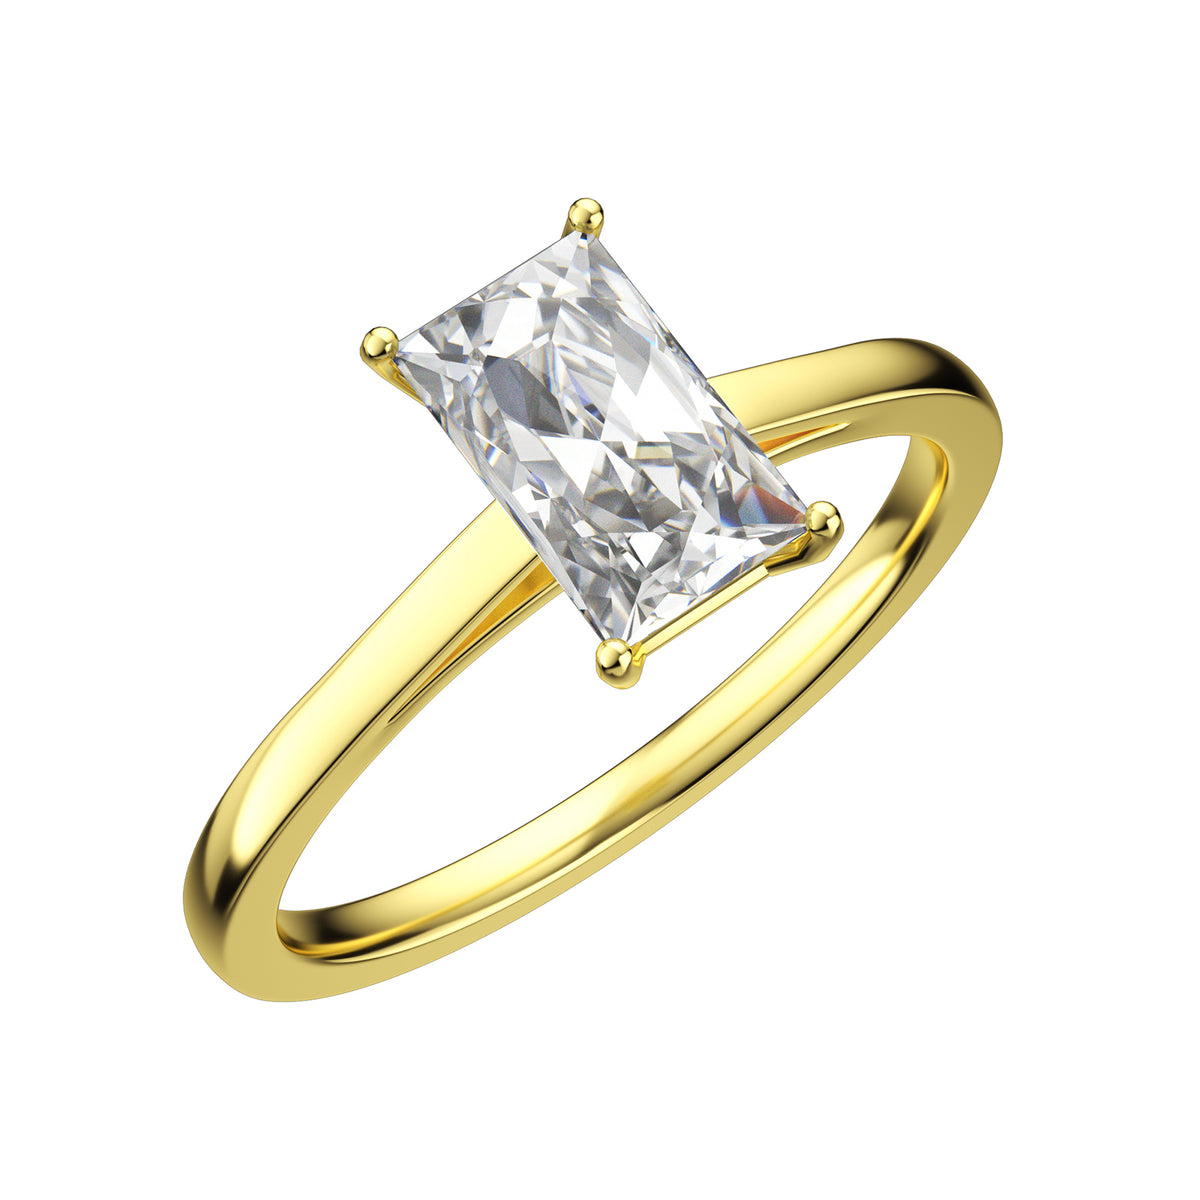 Vintage Bare Baguette Moissanite Diamond Engagement Ring in Yellow/White Gold